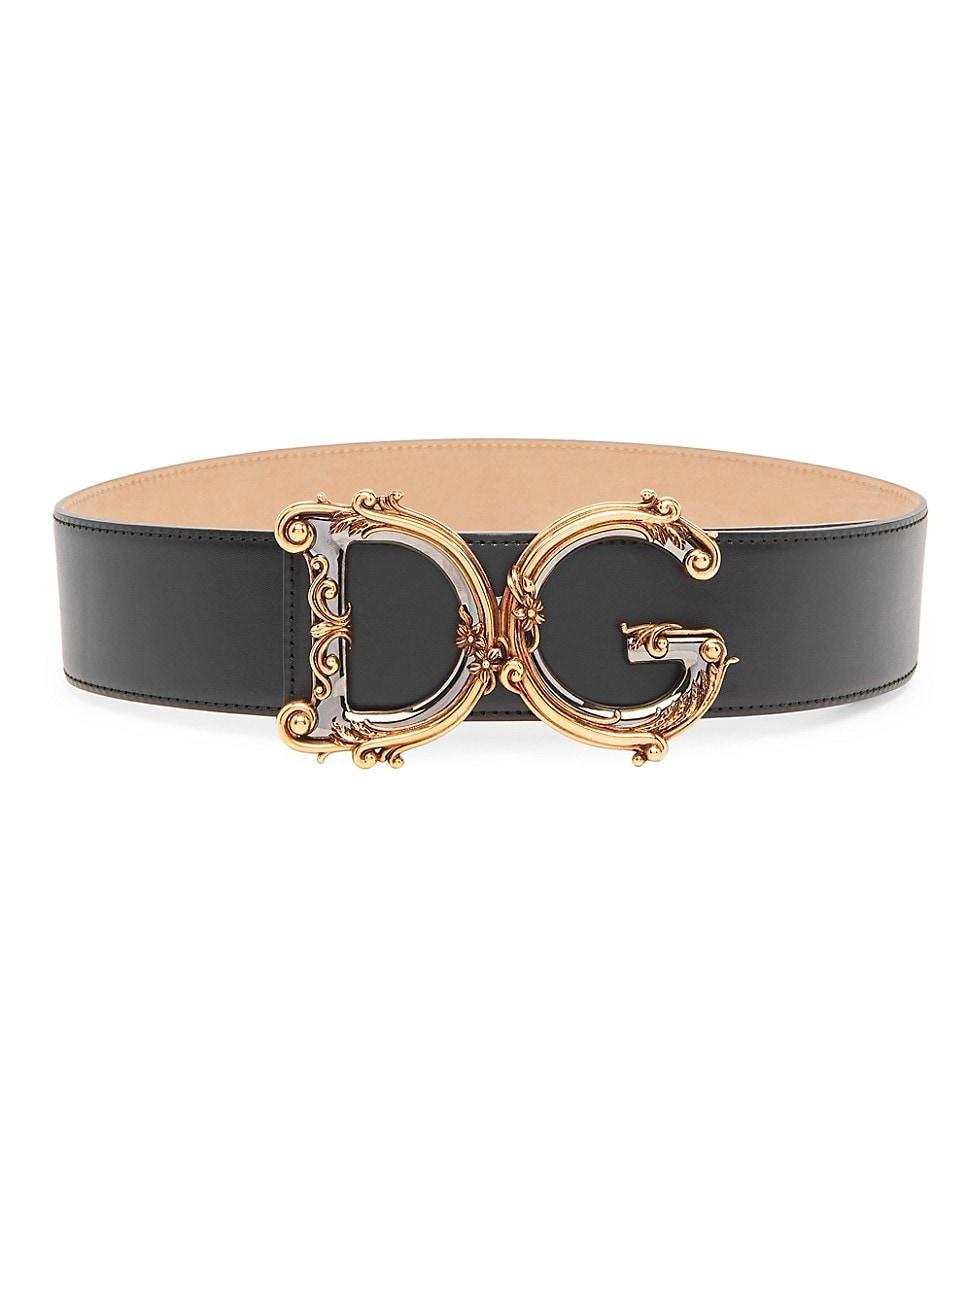 Dolce & Gabbana Cotton Calfskin Belt With Logo in Black - Save 70 